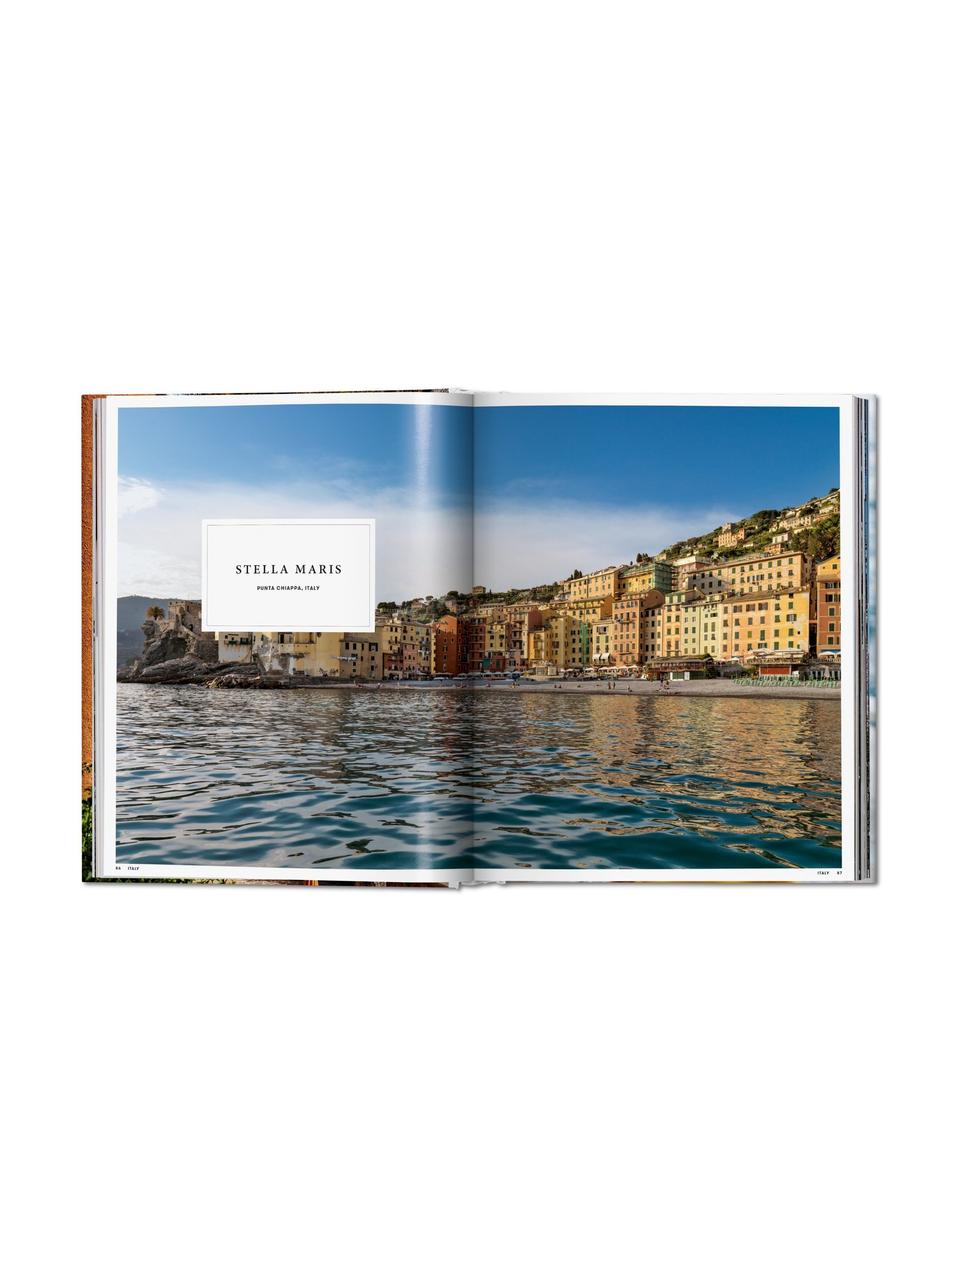 Bildband Great Escapes Mediterranean, Papier, Hardcover, Mediterranean, B 24 x L 31 cm